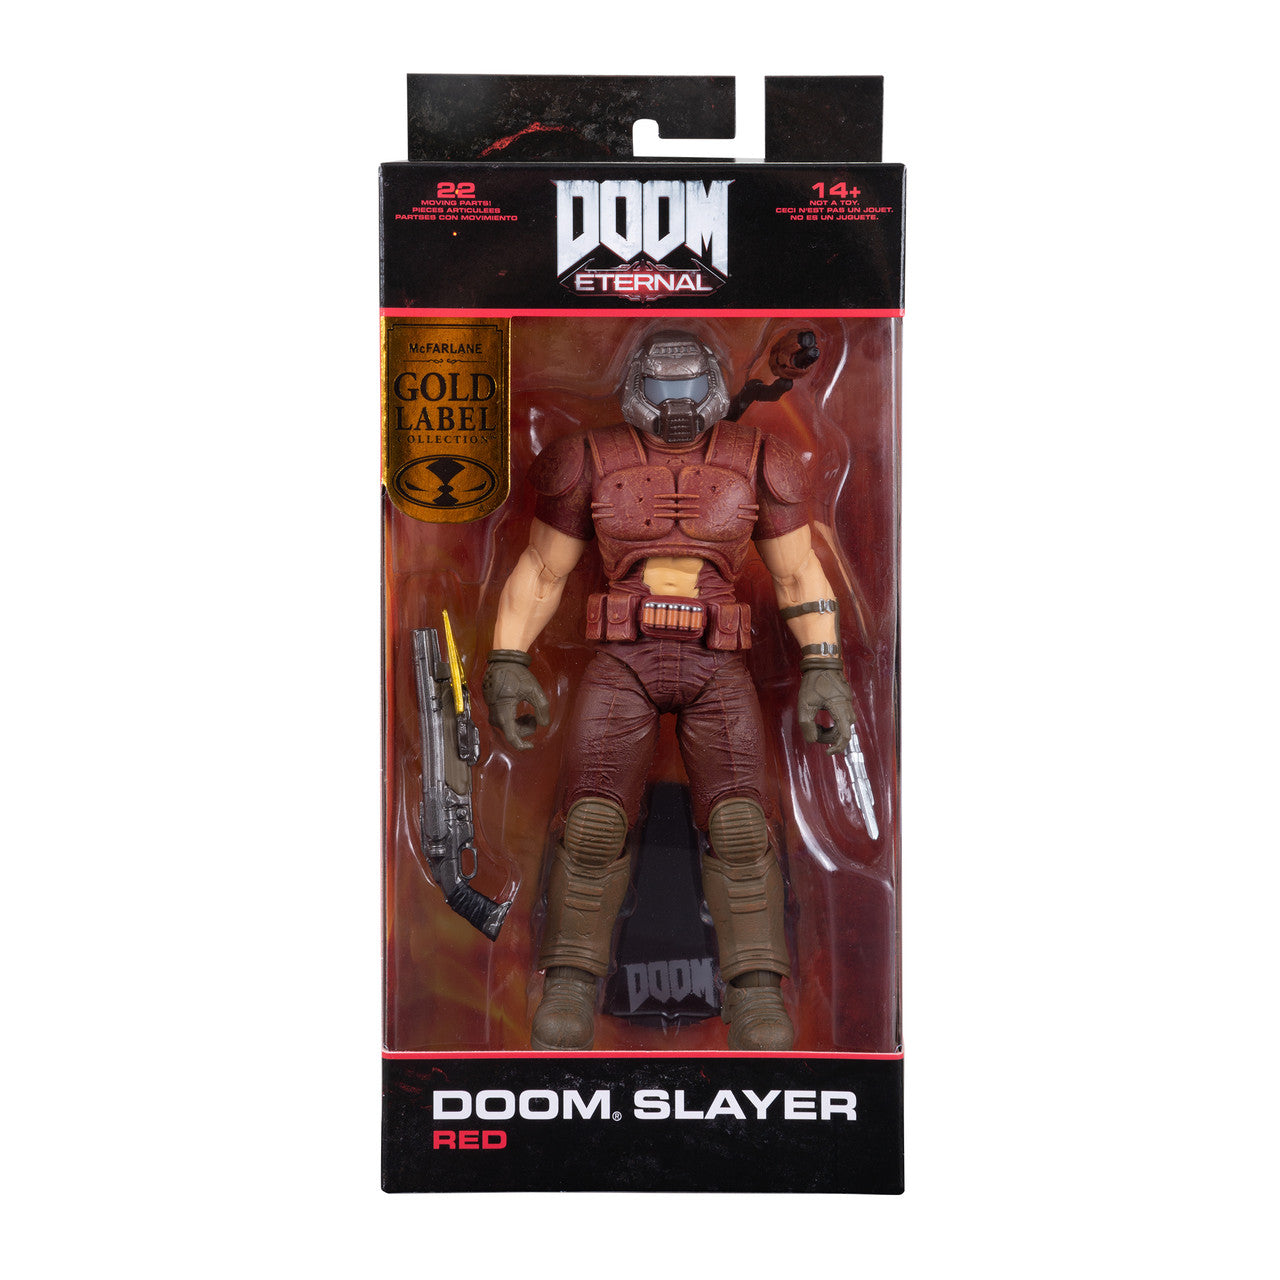 Doom Slayer Classic Marine w/Red Skin (Doom) 7" Gold Label Figure By McFarlane Toys